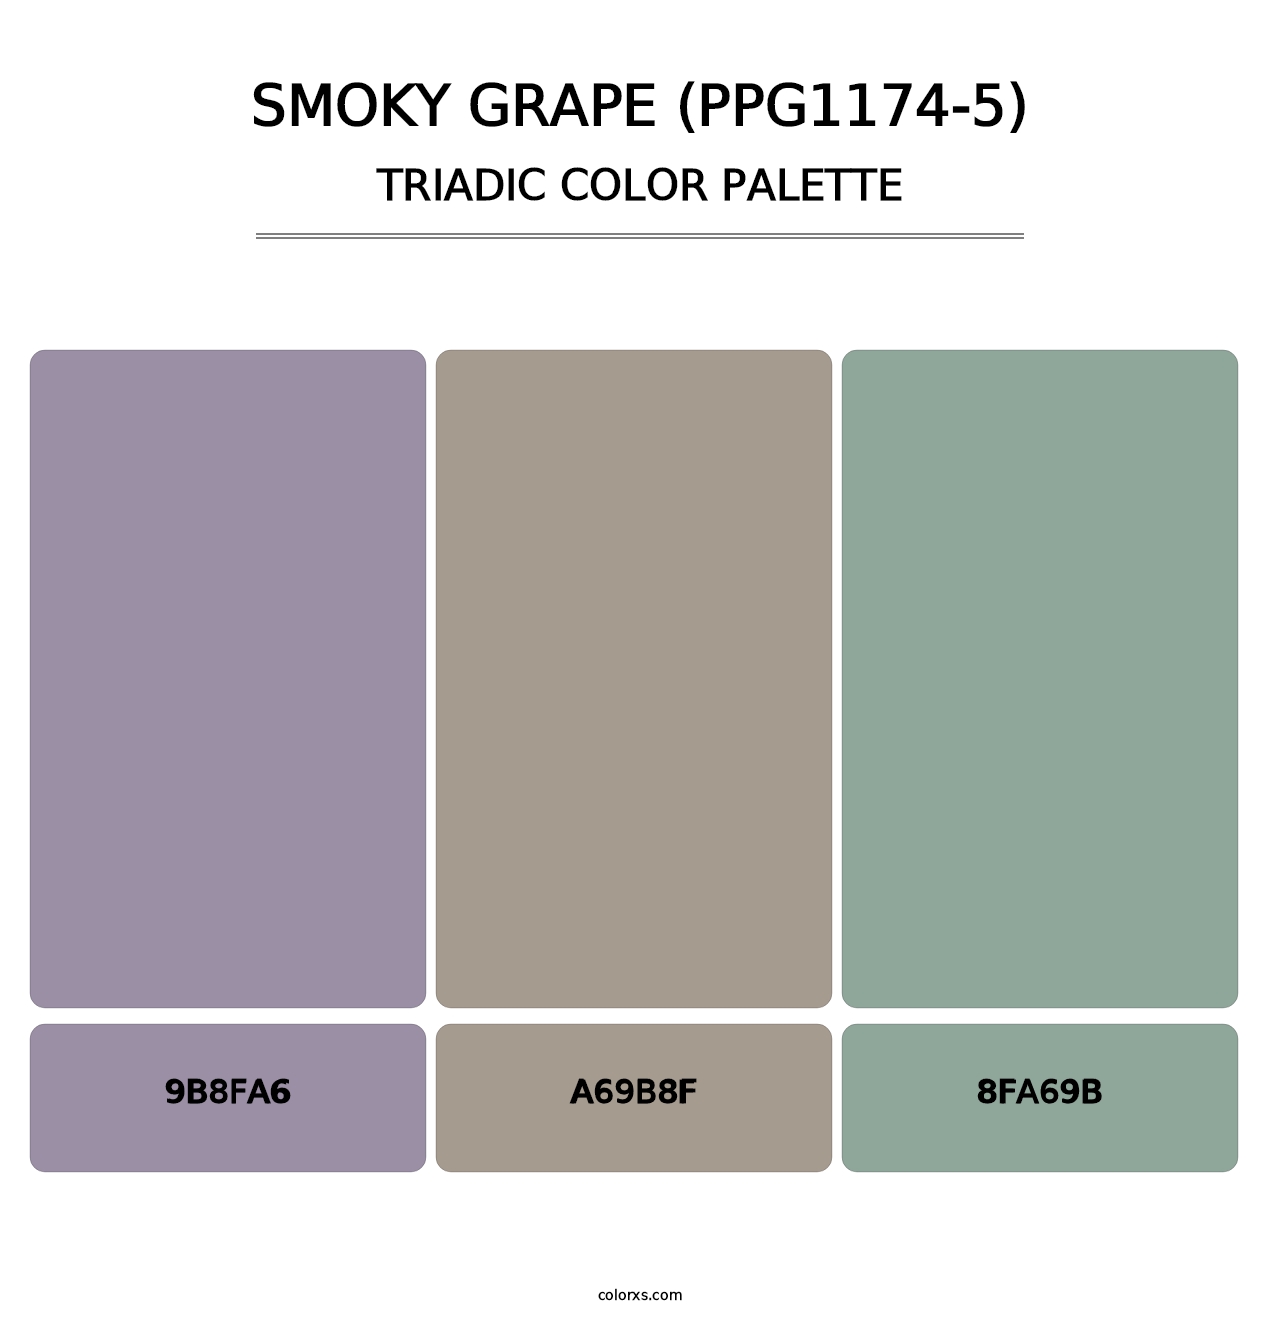 Smoky Grape (PPG1174-5) - Triadic Color Palette